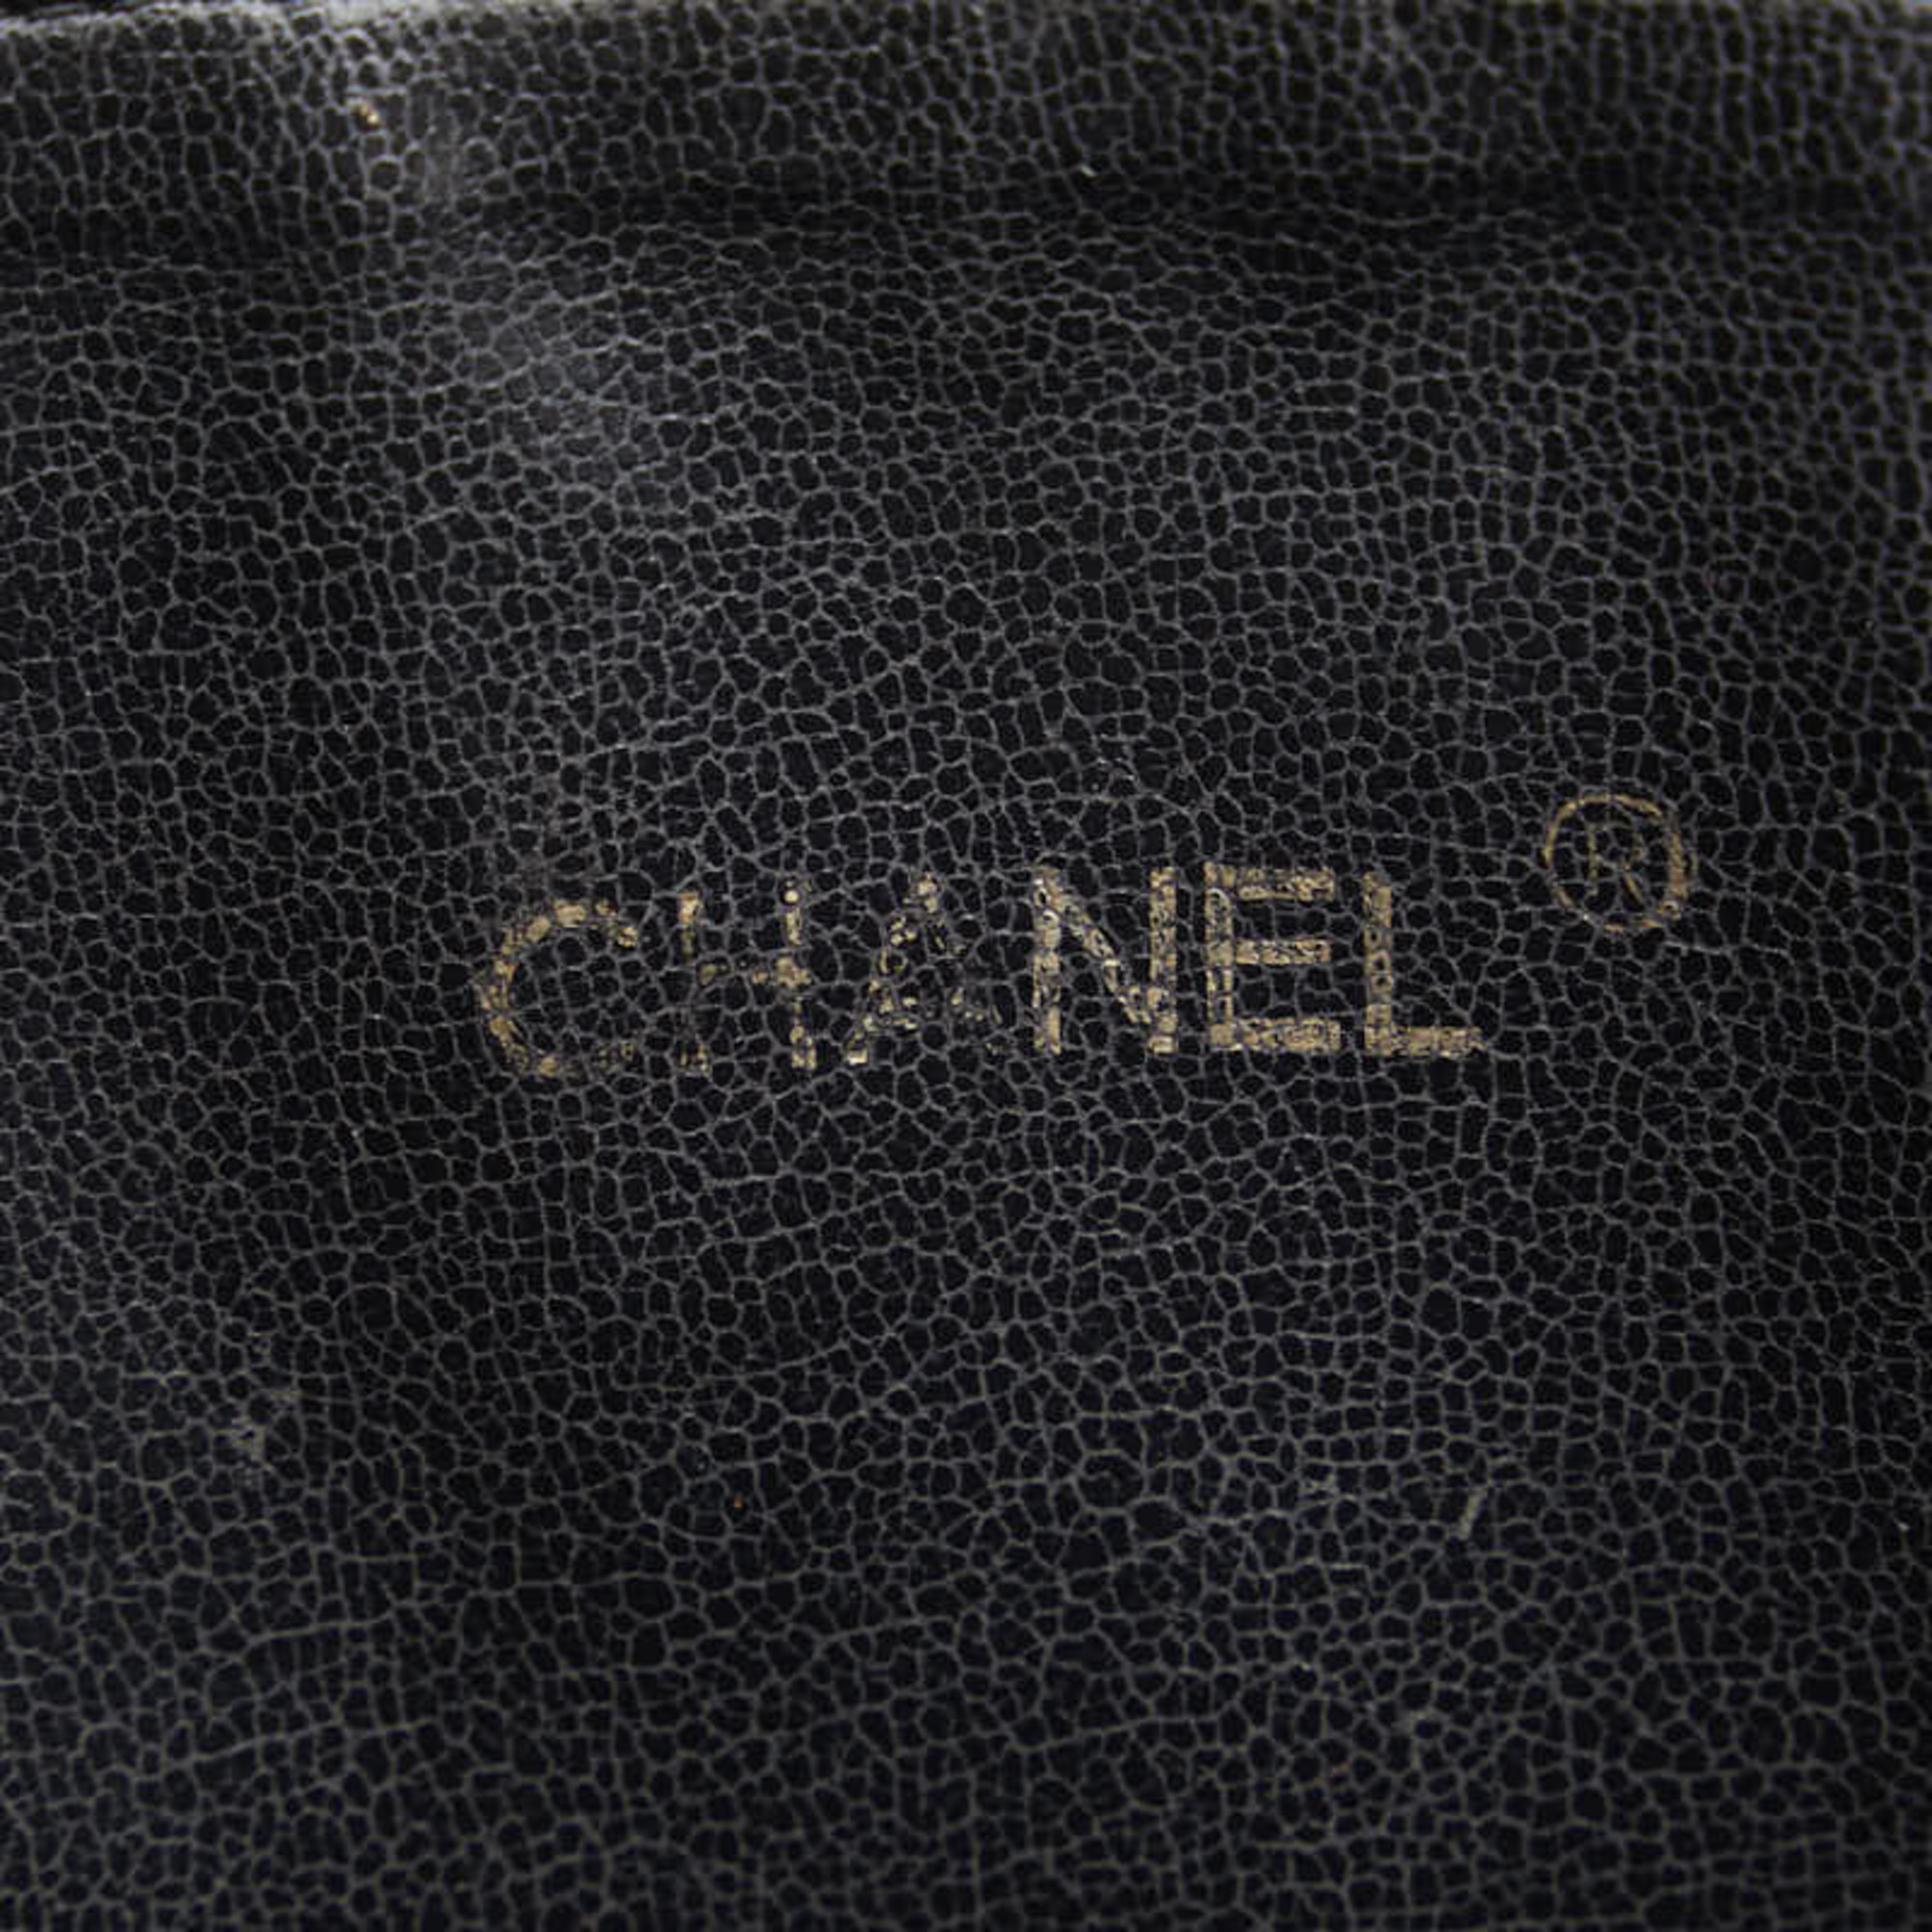 Chanel Coco Mark Tote Bag Shoulder Black Caviar Skin Women's CHANEL